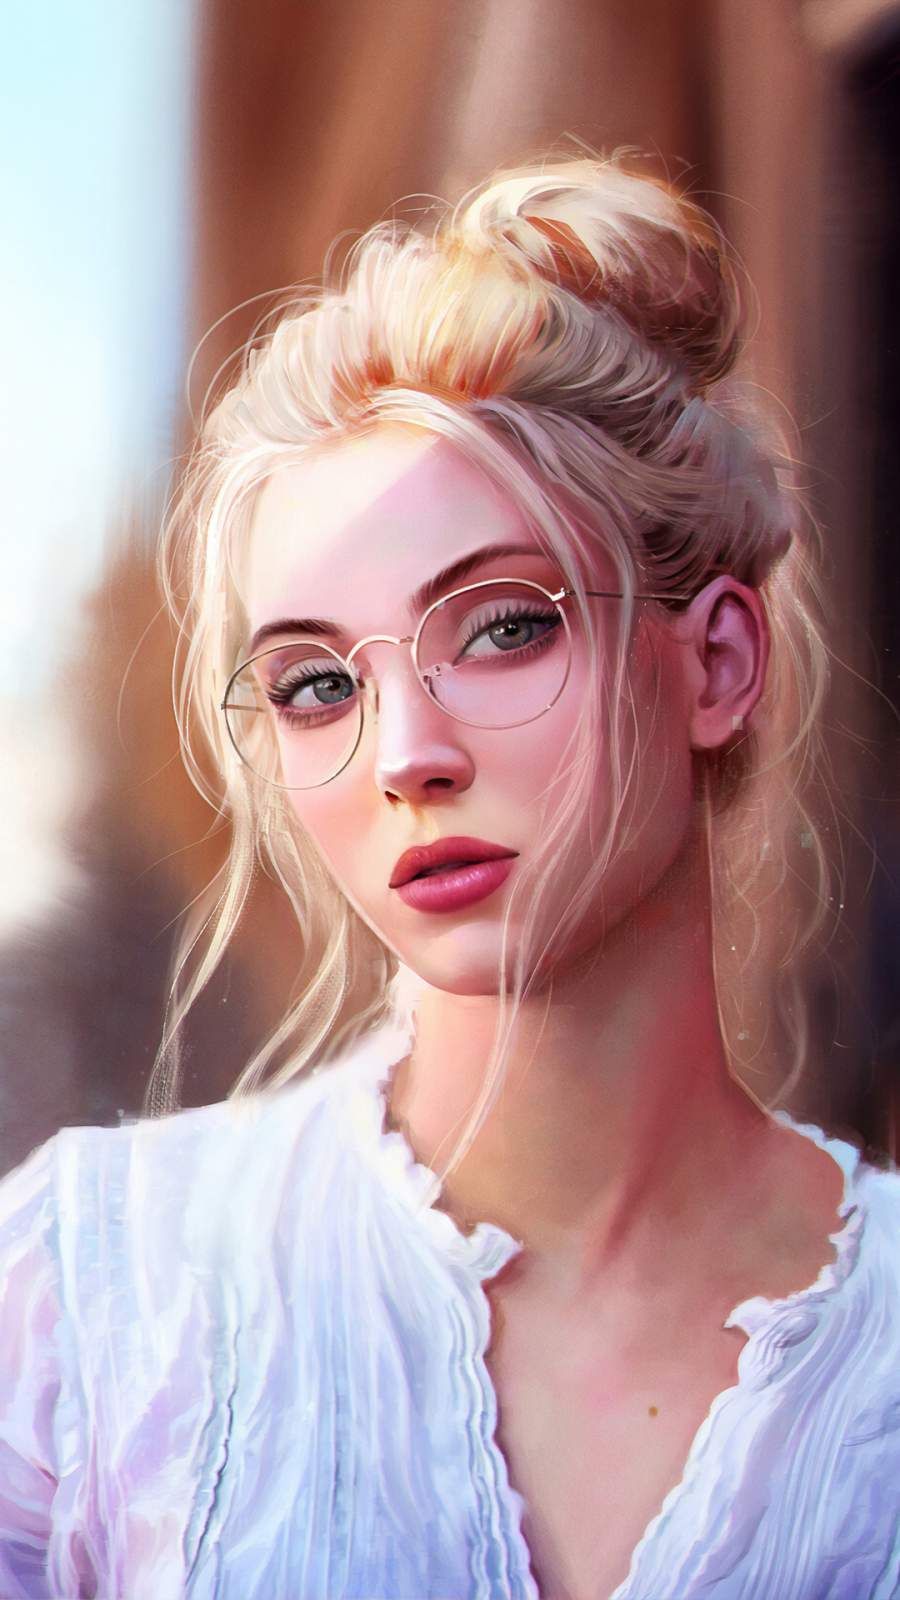 Girl with Glasses Artistic Portrait iPhone Wallpaper. Portrait